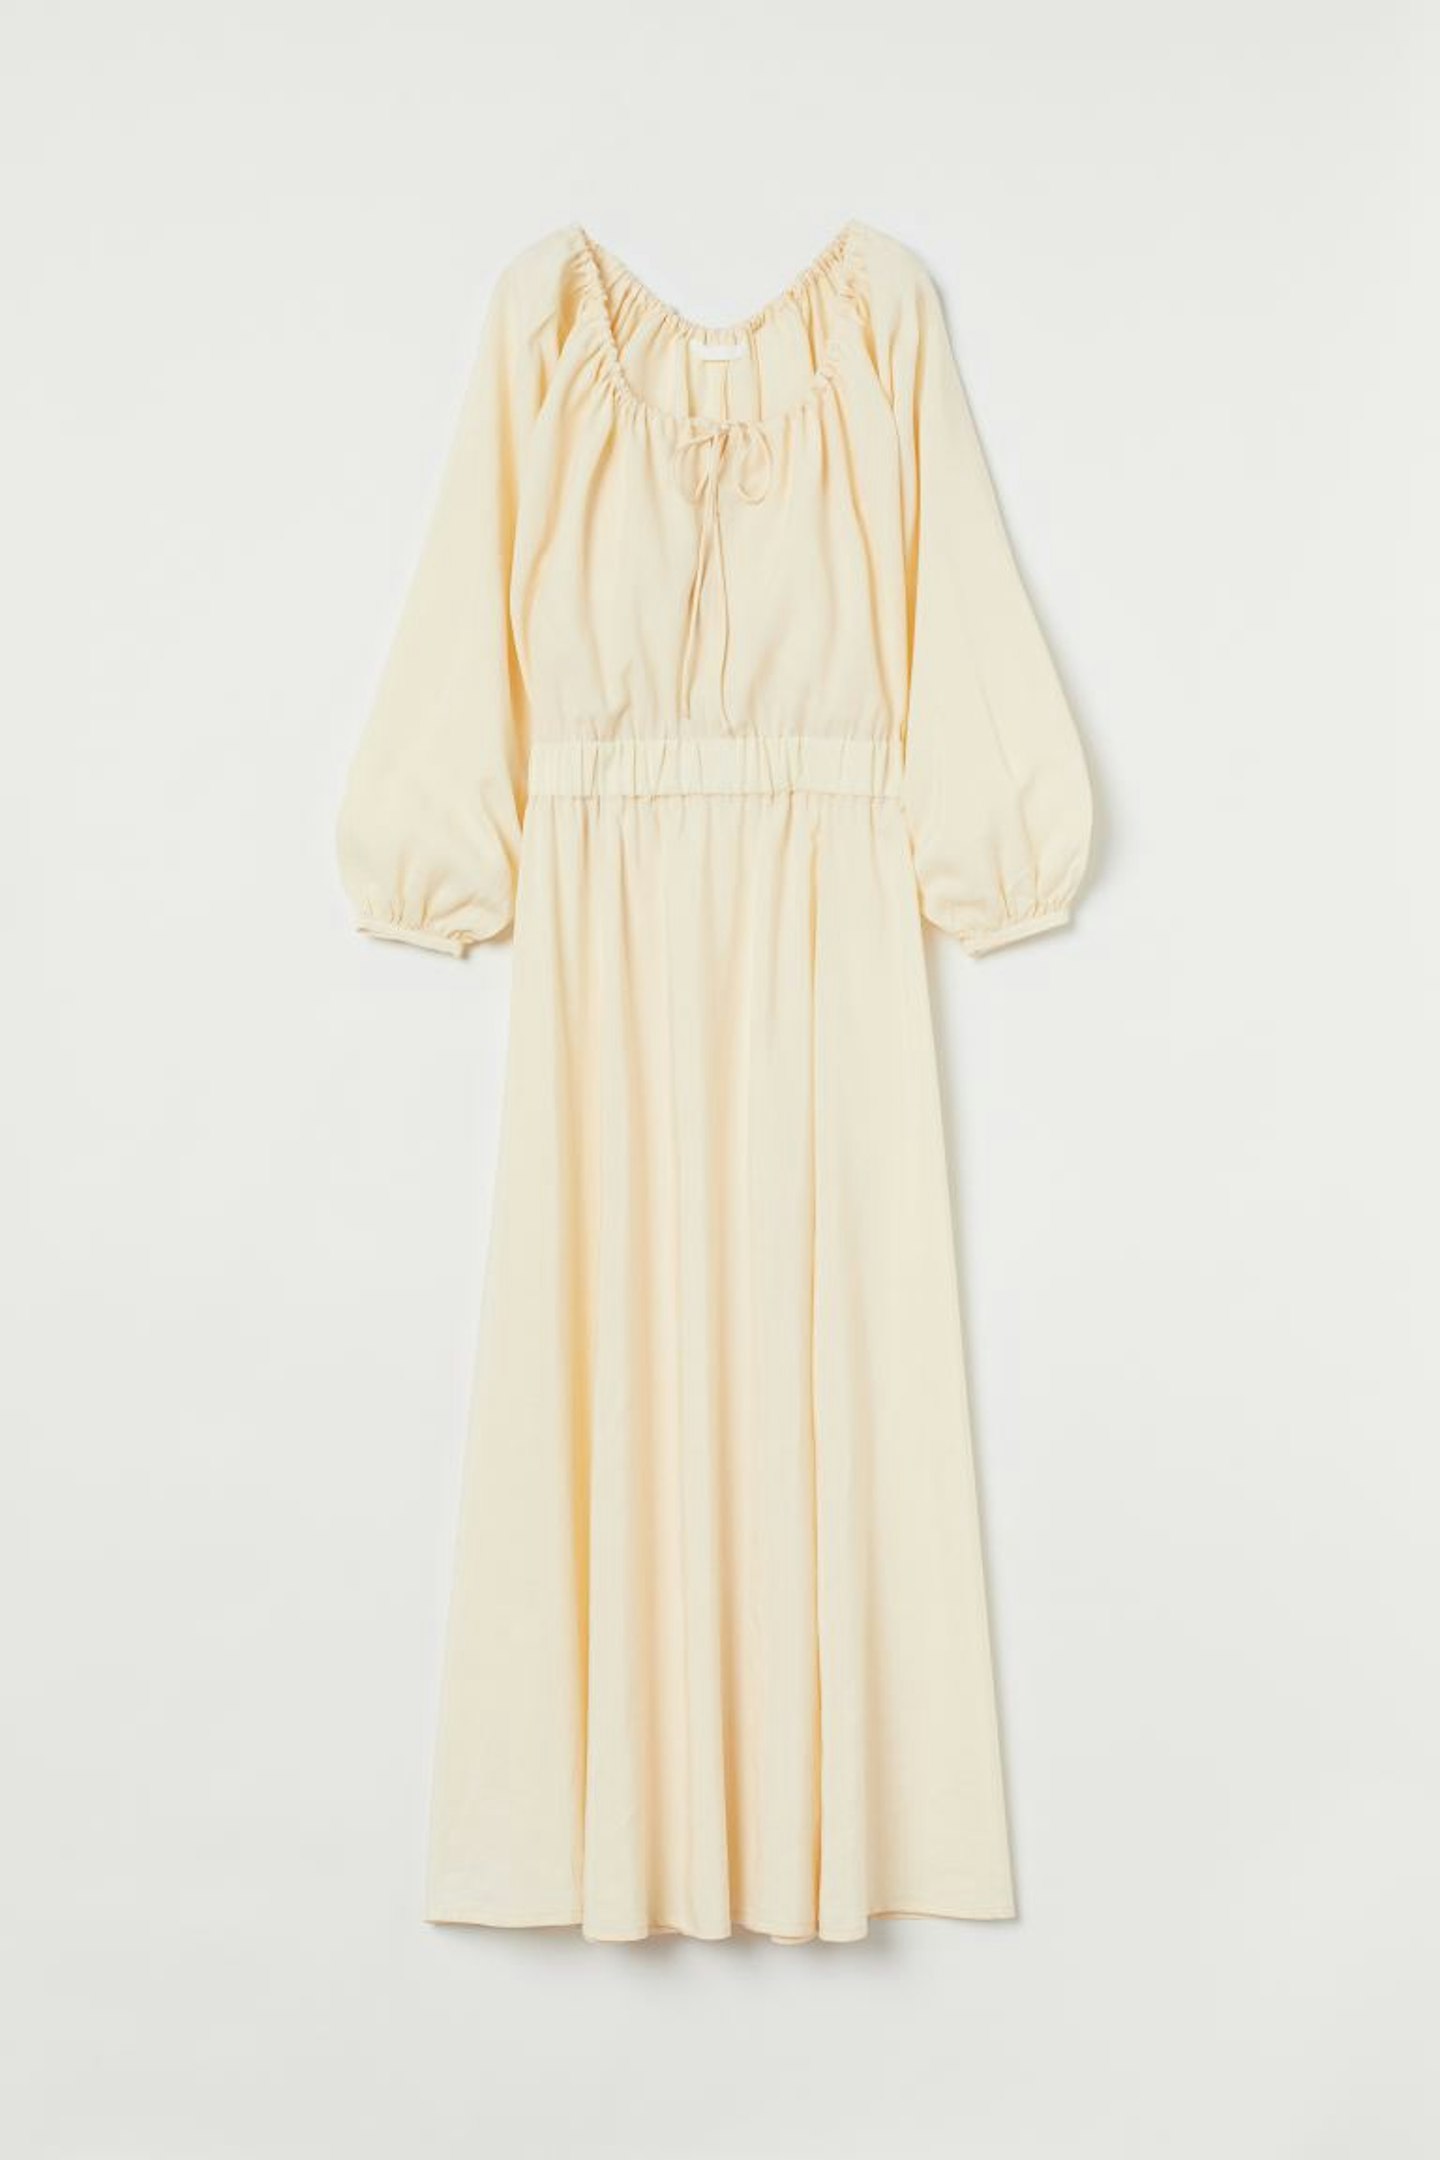 H&M, Long Lyocell-Blend Dress, £34.99